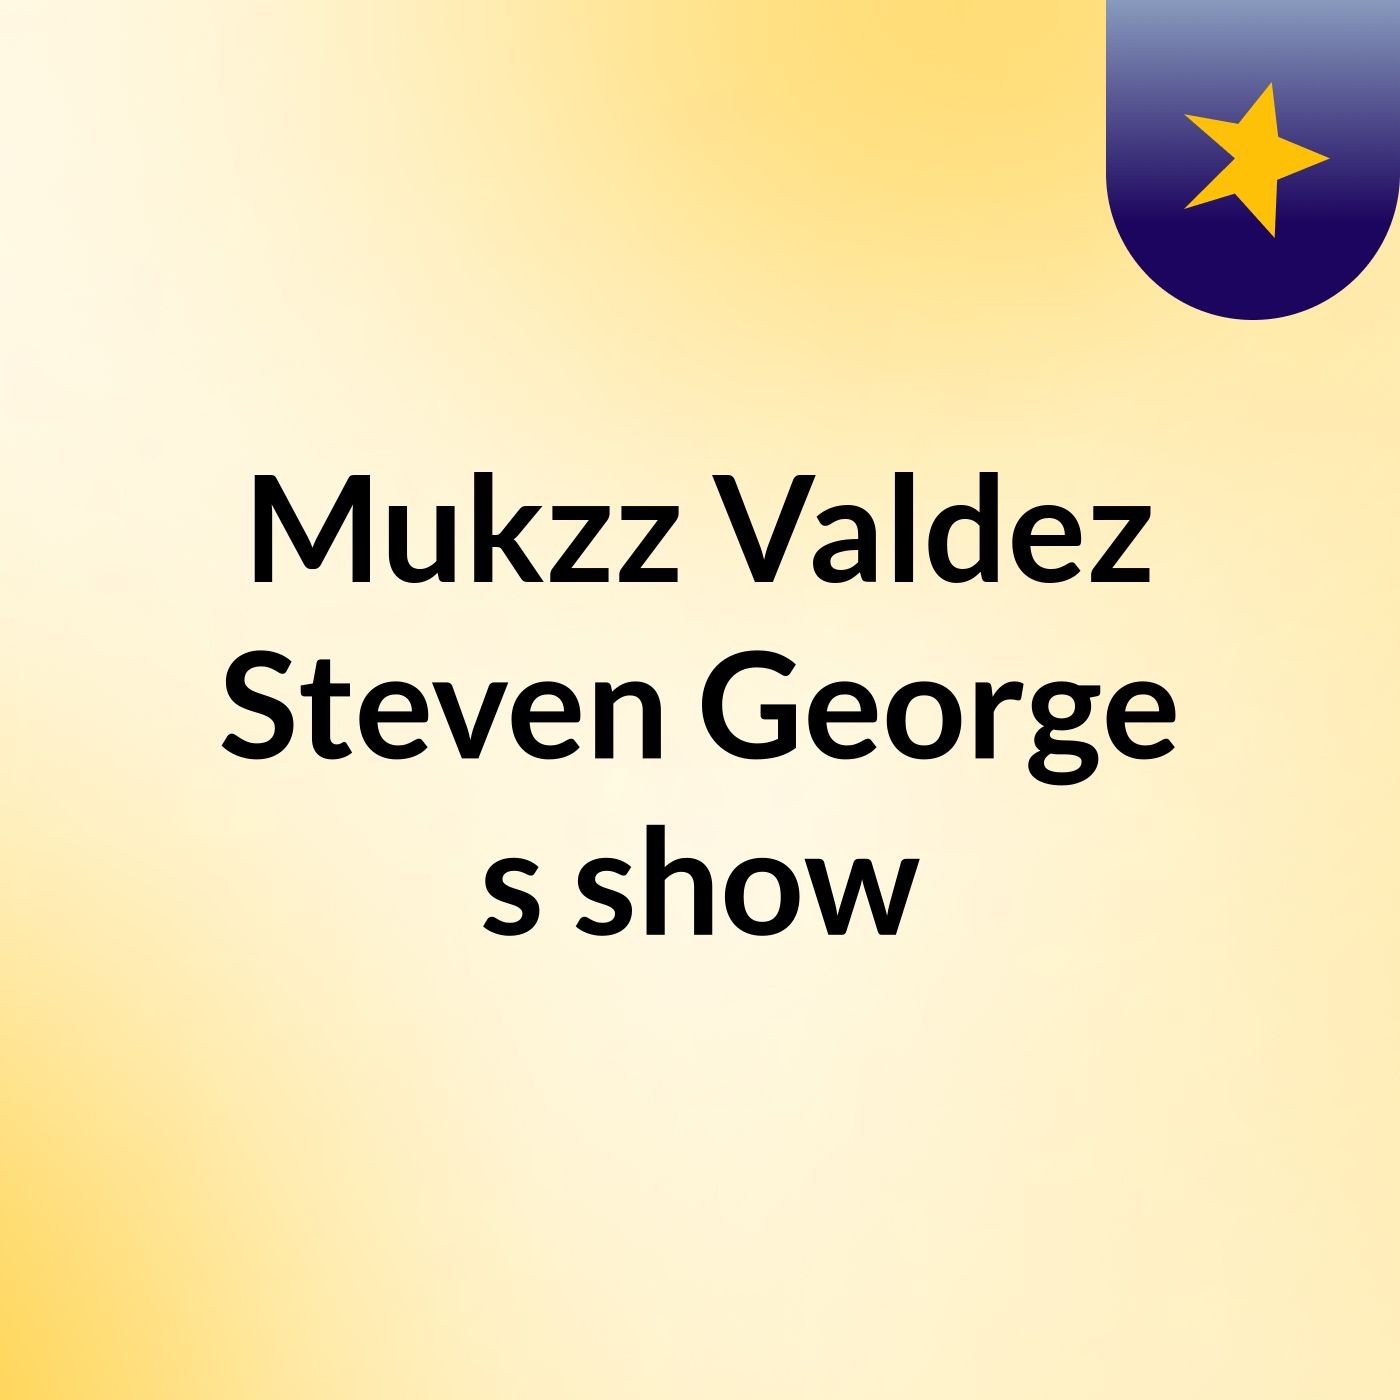 Mukzz Valdez Steven George's show